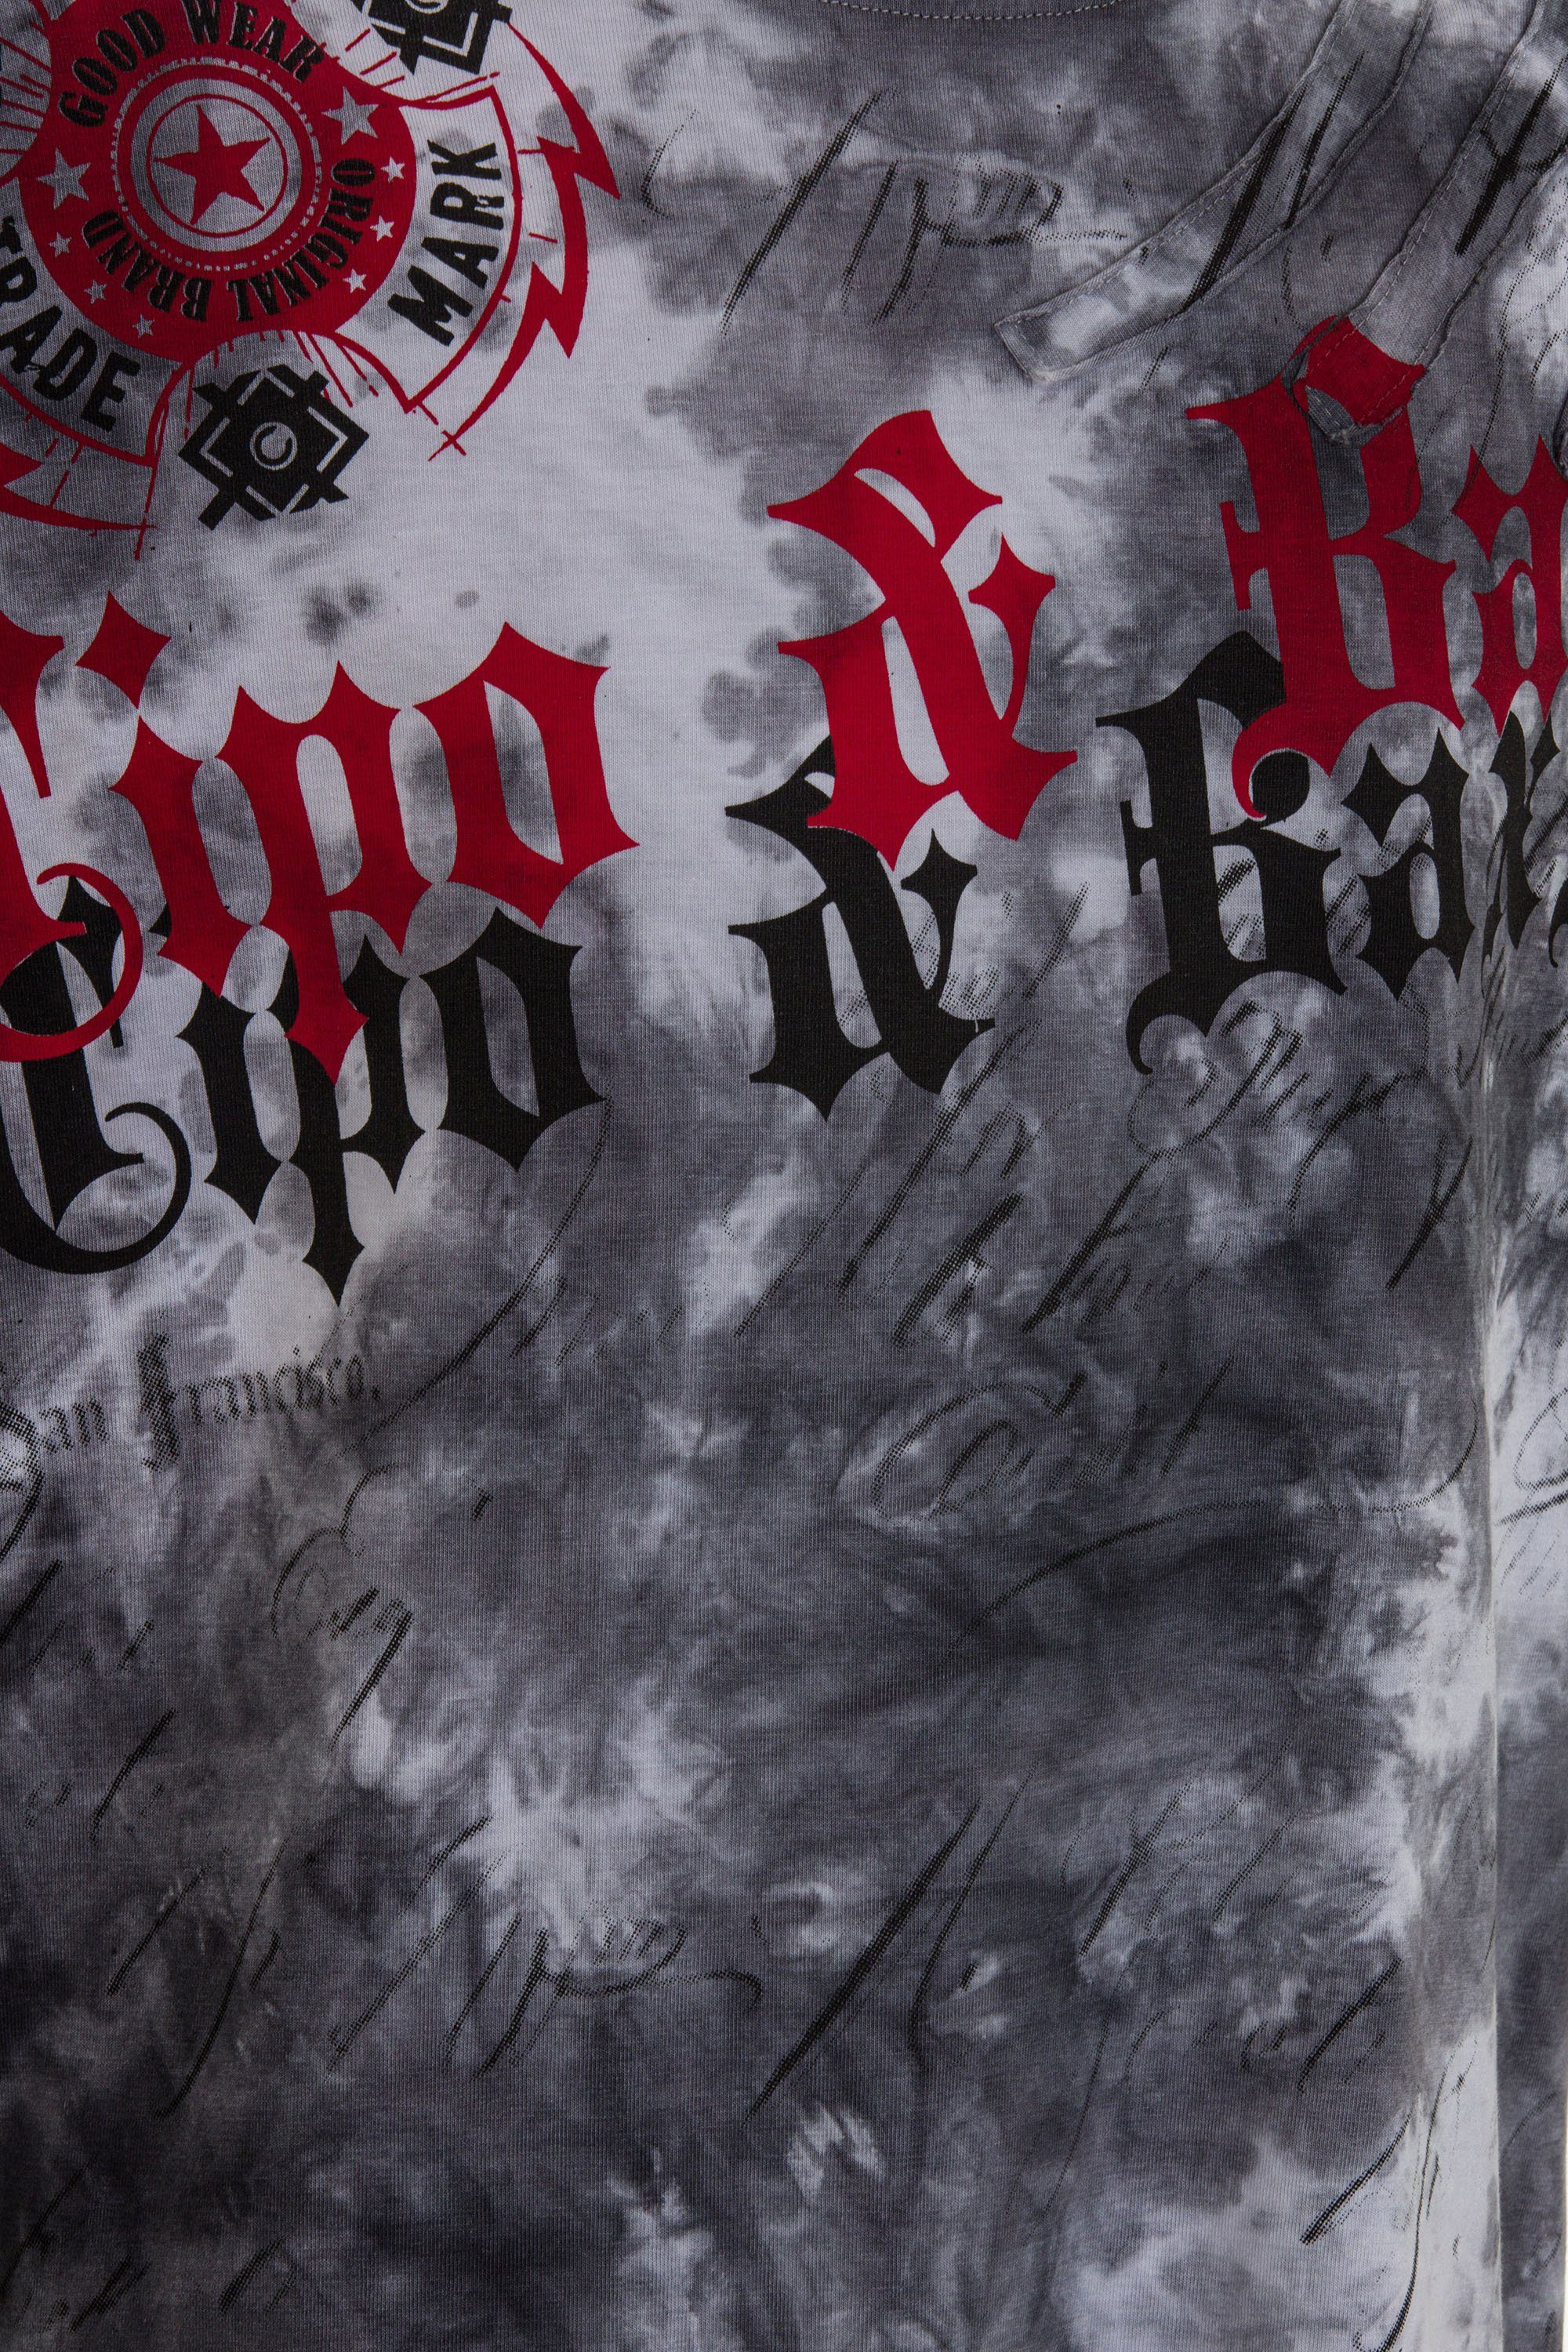 großflächigem Baxx T-Shirt Cipo & anthrazit mit Markenprint